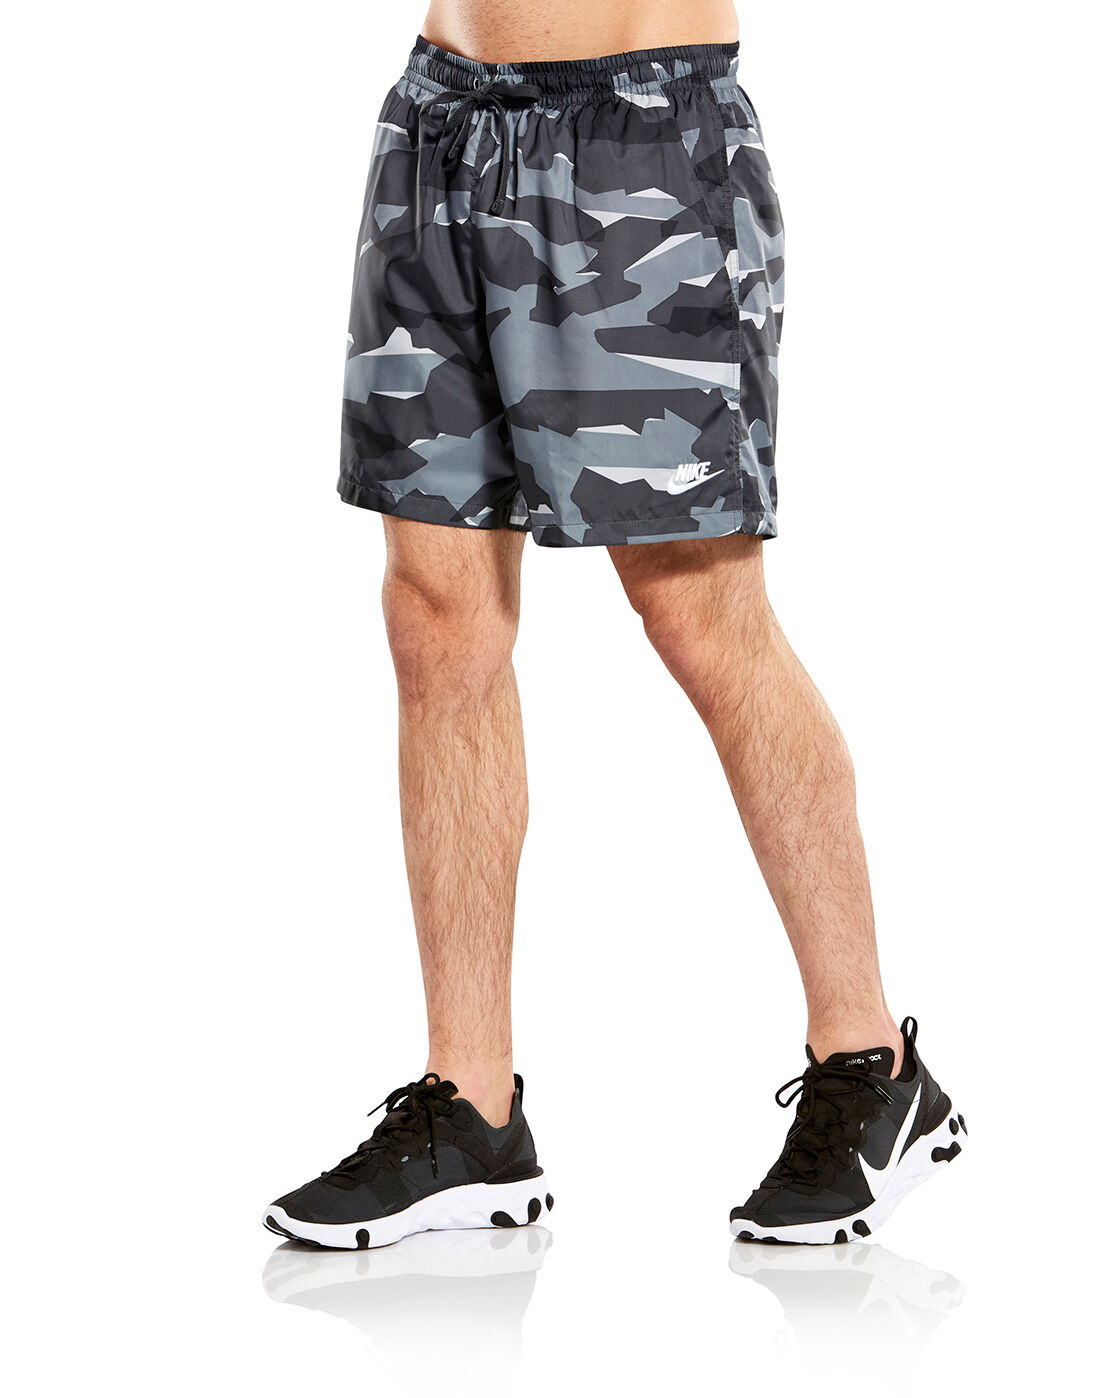 Men's Grey Camo Nike Shorts | Life 